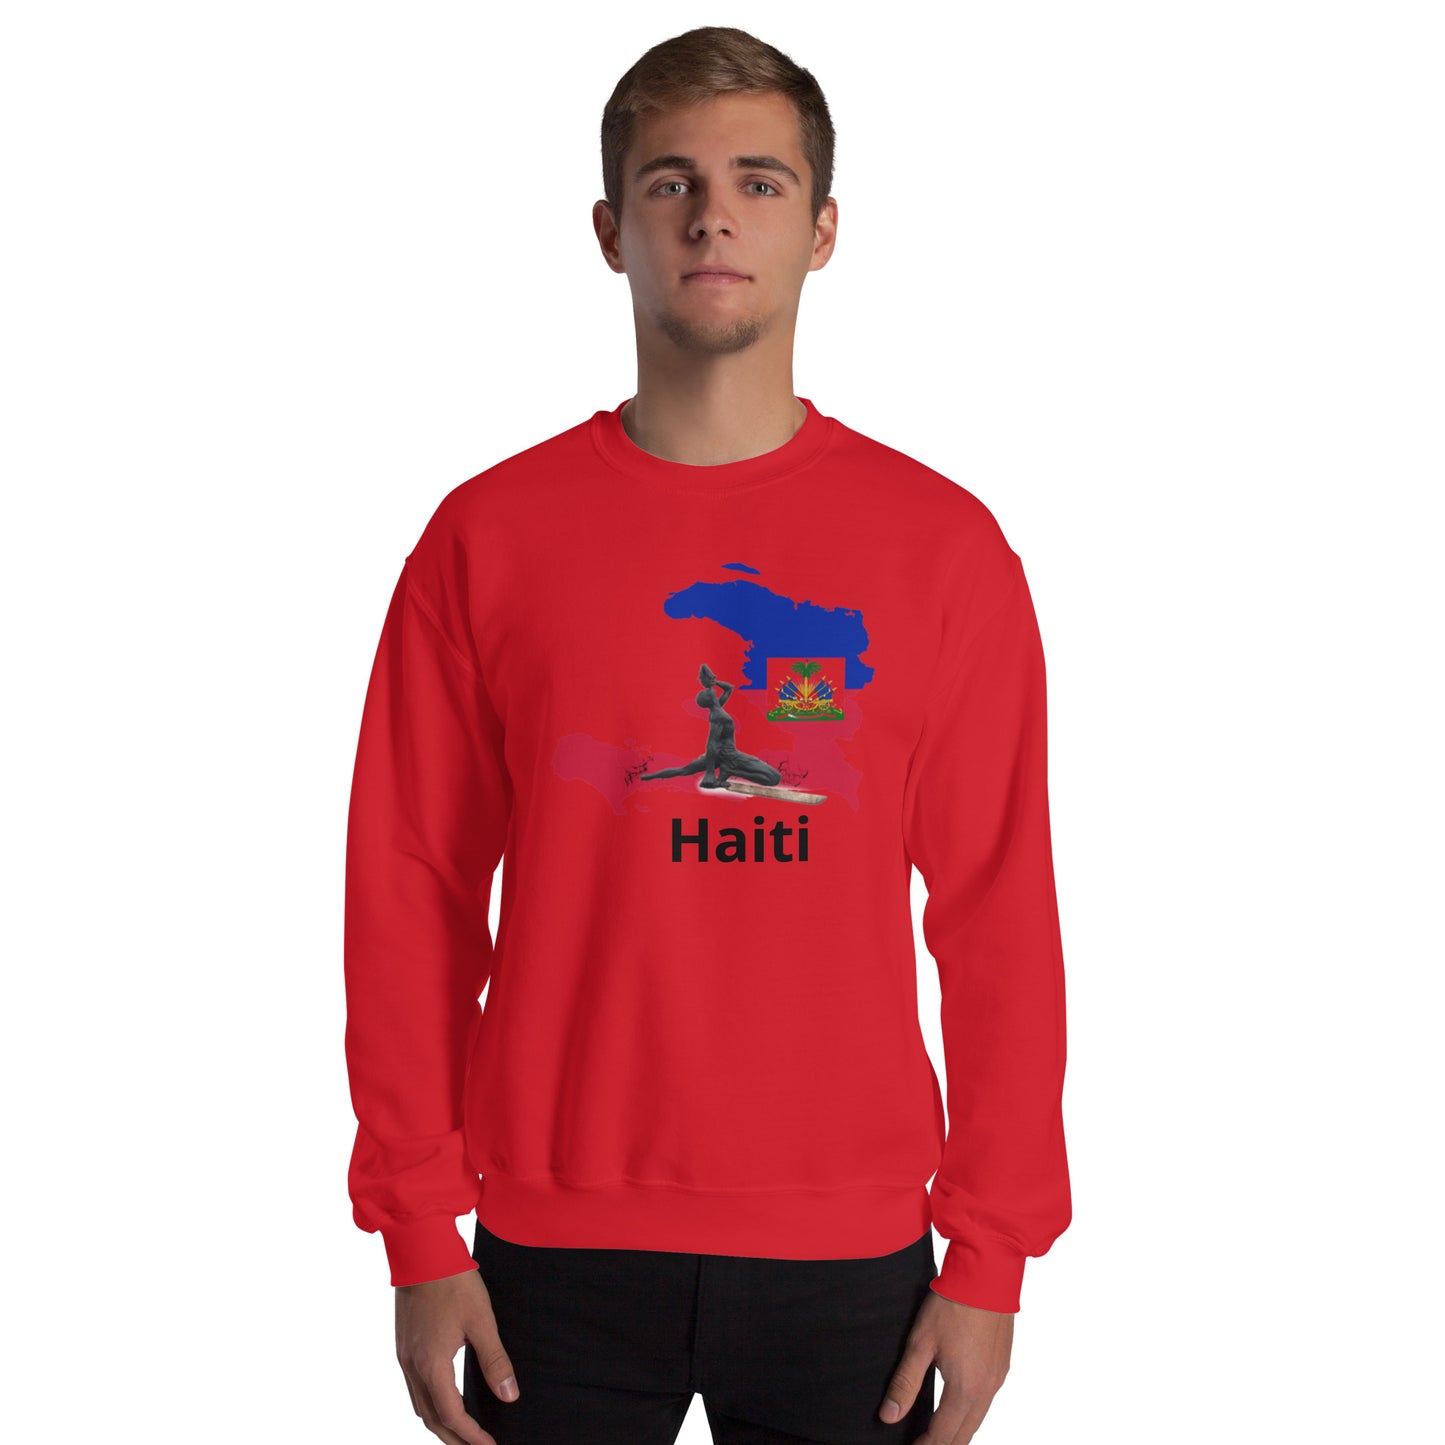 Haiti Unisex Sweatshirt